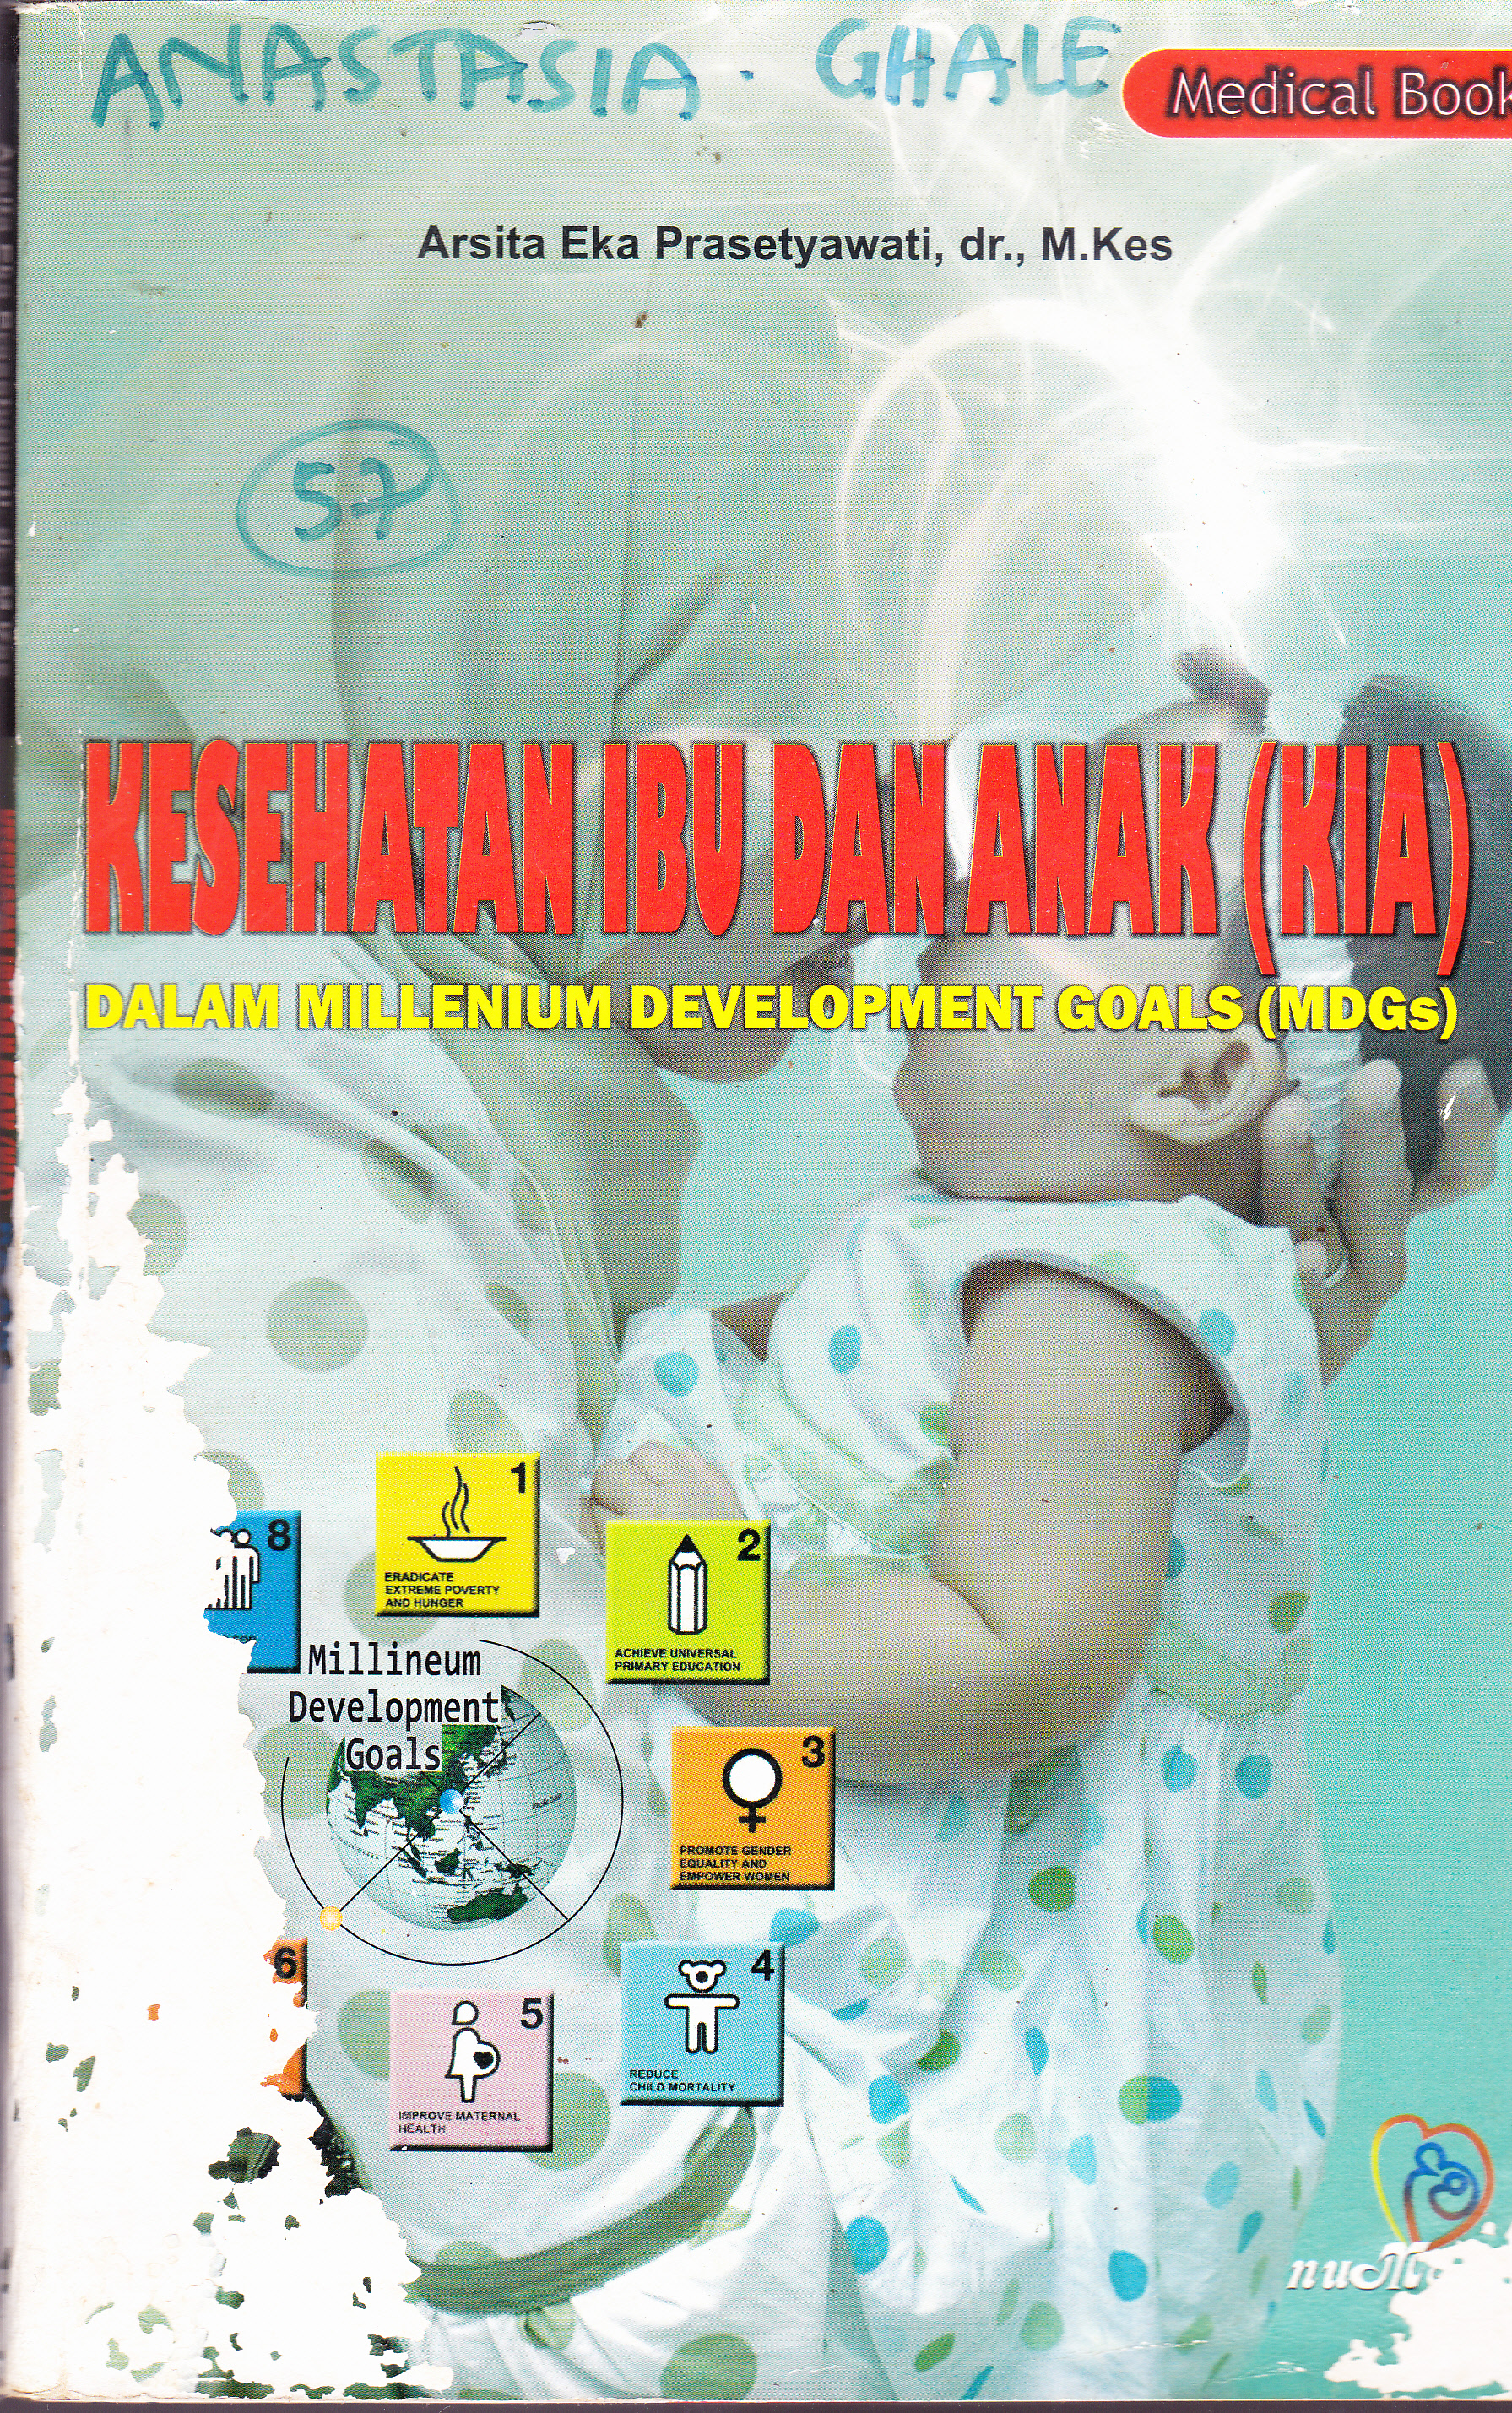 Kesehatan Ibu & Anak (KIA);DALAM MILLENIUM DEVELOPMENT GOALS (MDGs)